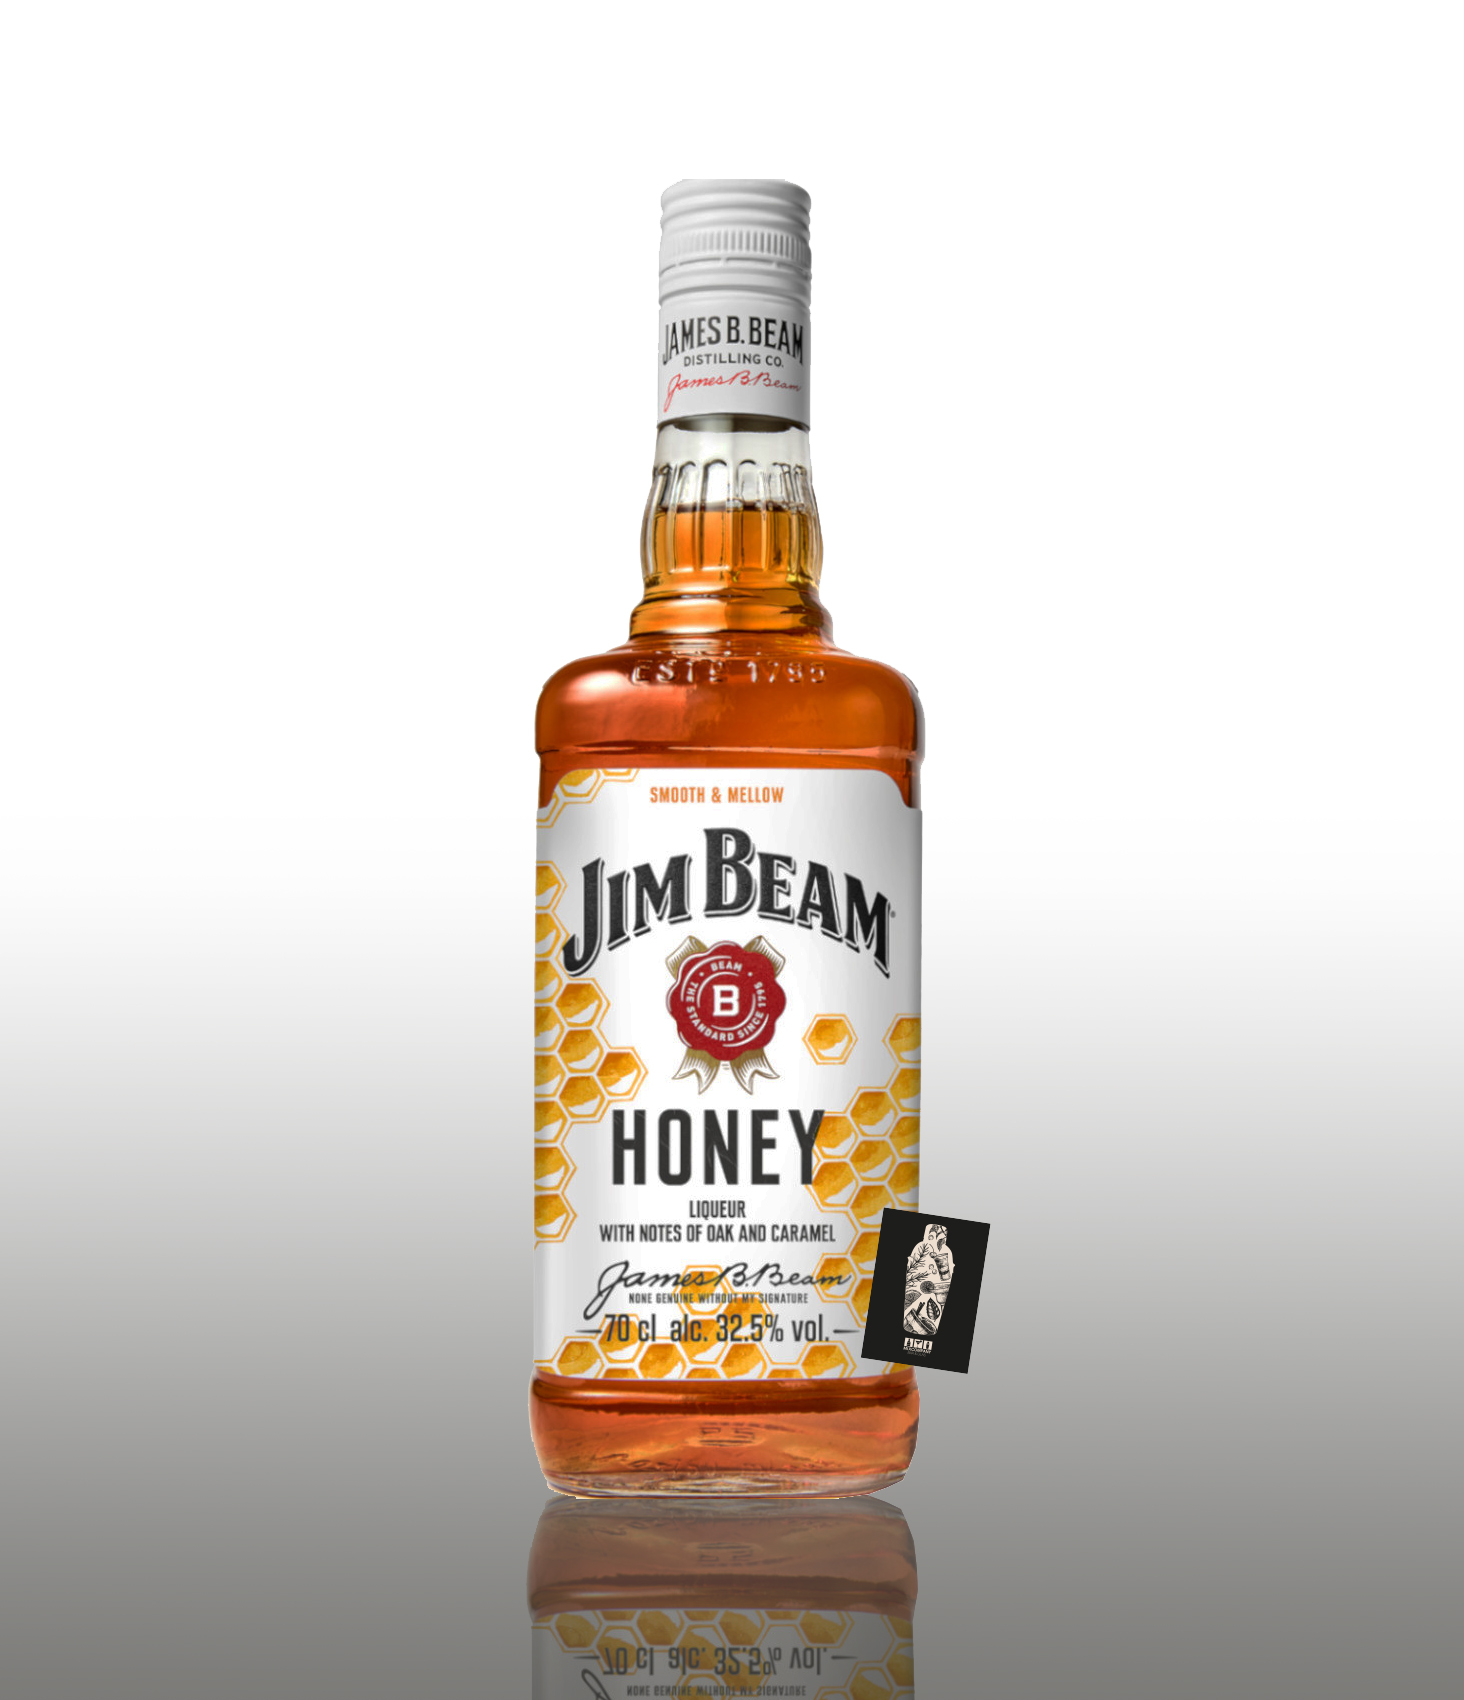 Jim Beam Honey 0,7l (32,5% vol.) Liqueur with notes of oak and caramel- [Enthält Sulfite]